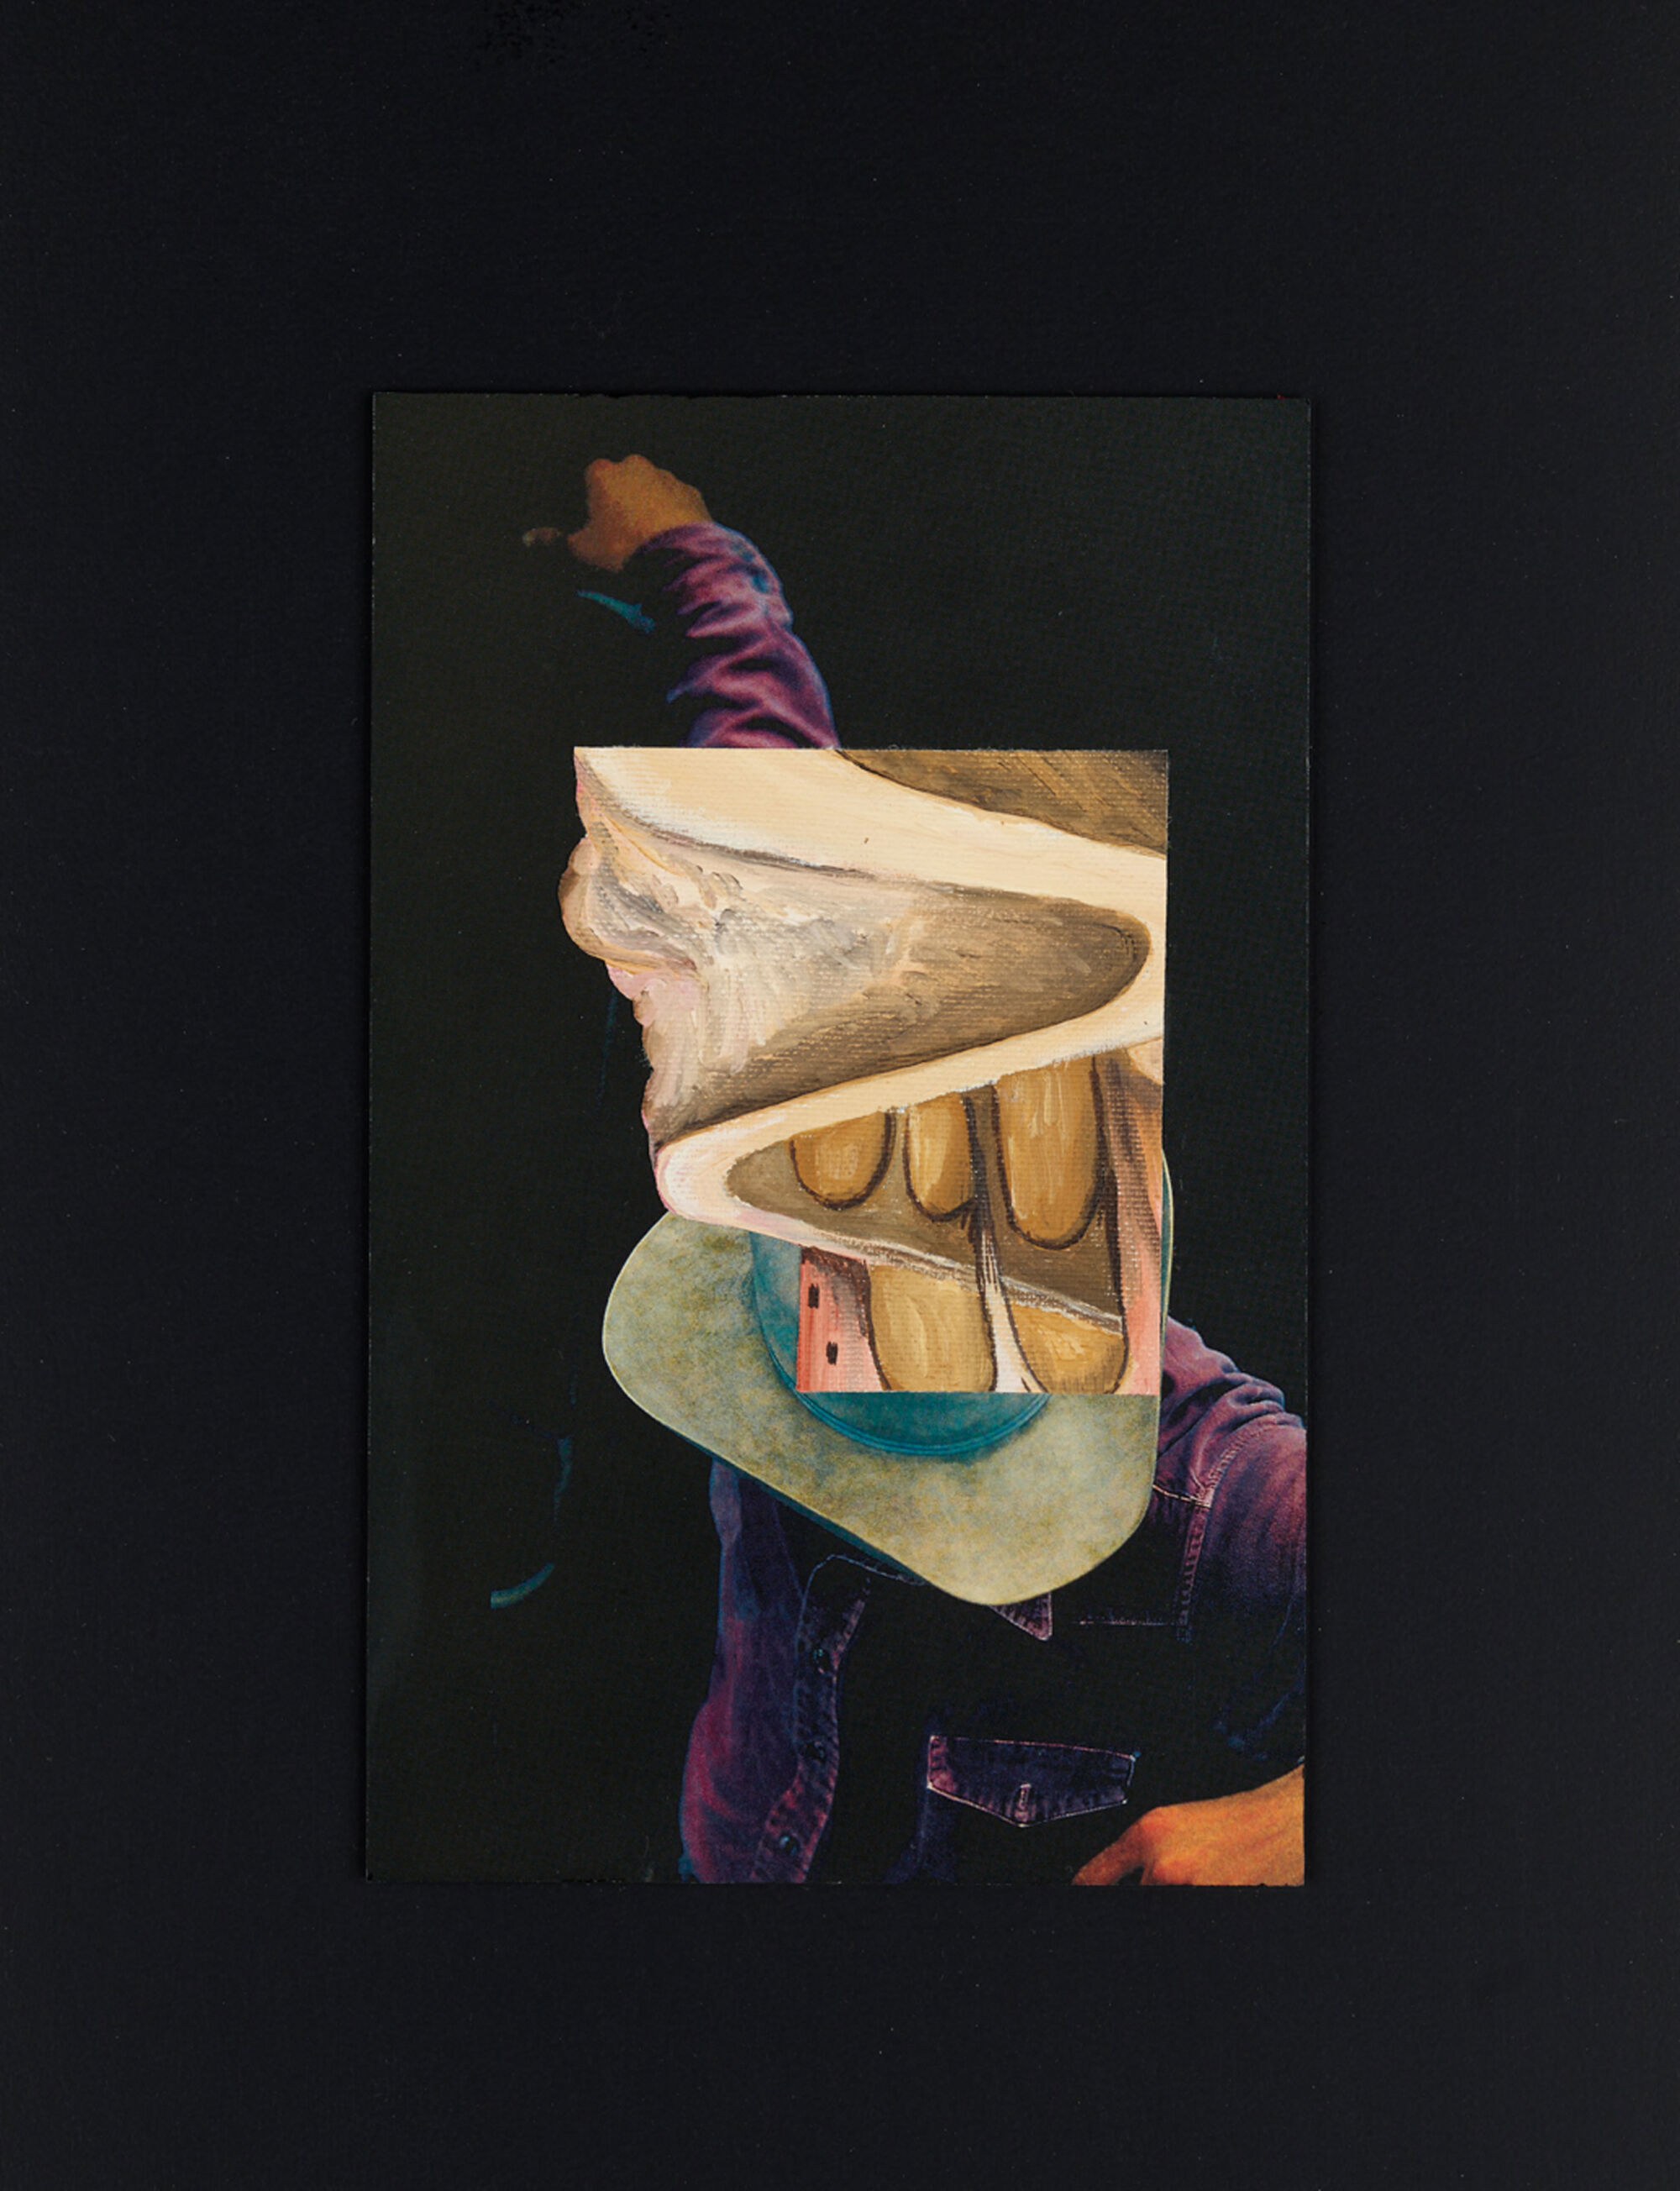 The Wick - Arturo Herrera
Untitled, 2020
mixed media collage
50 x 30 cm.
19 3/4x 11 3/4 in.
© Arturo Herrera, Courtesy the artist, Thomas Dane Gallery
and Sikkema Jenkins & Co., New York